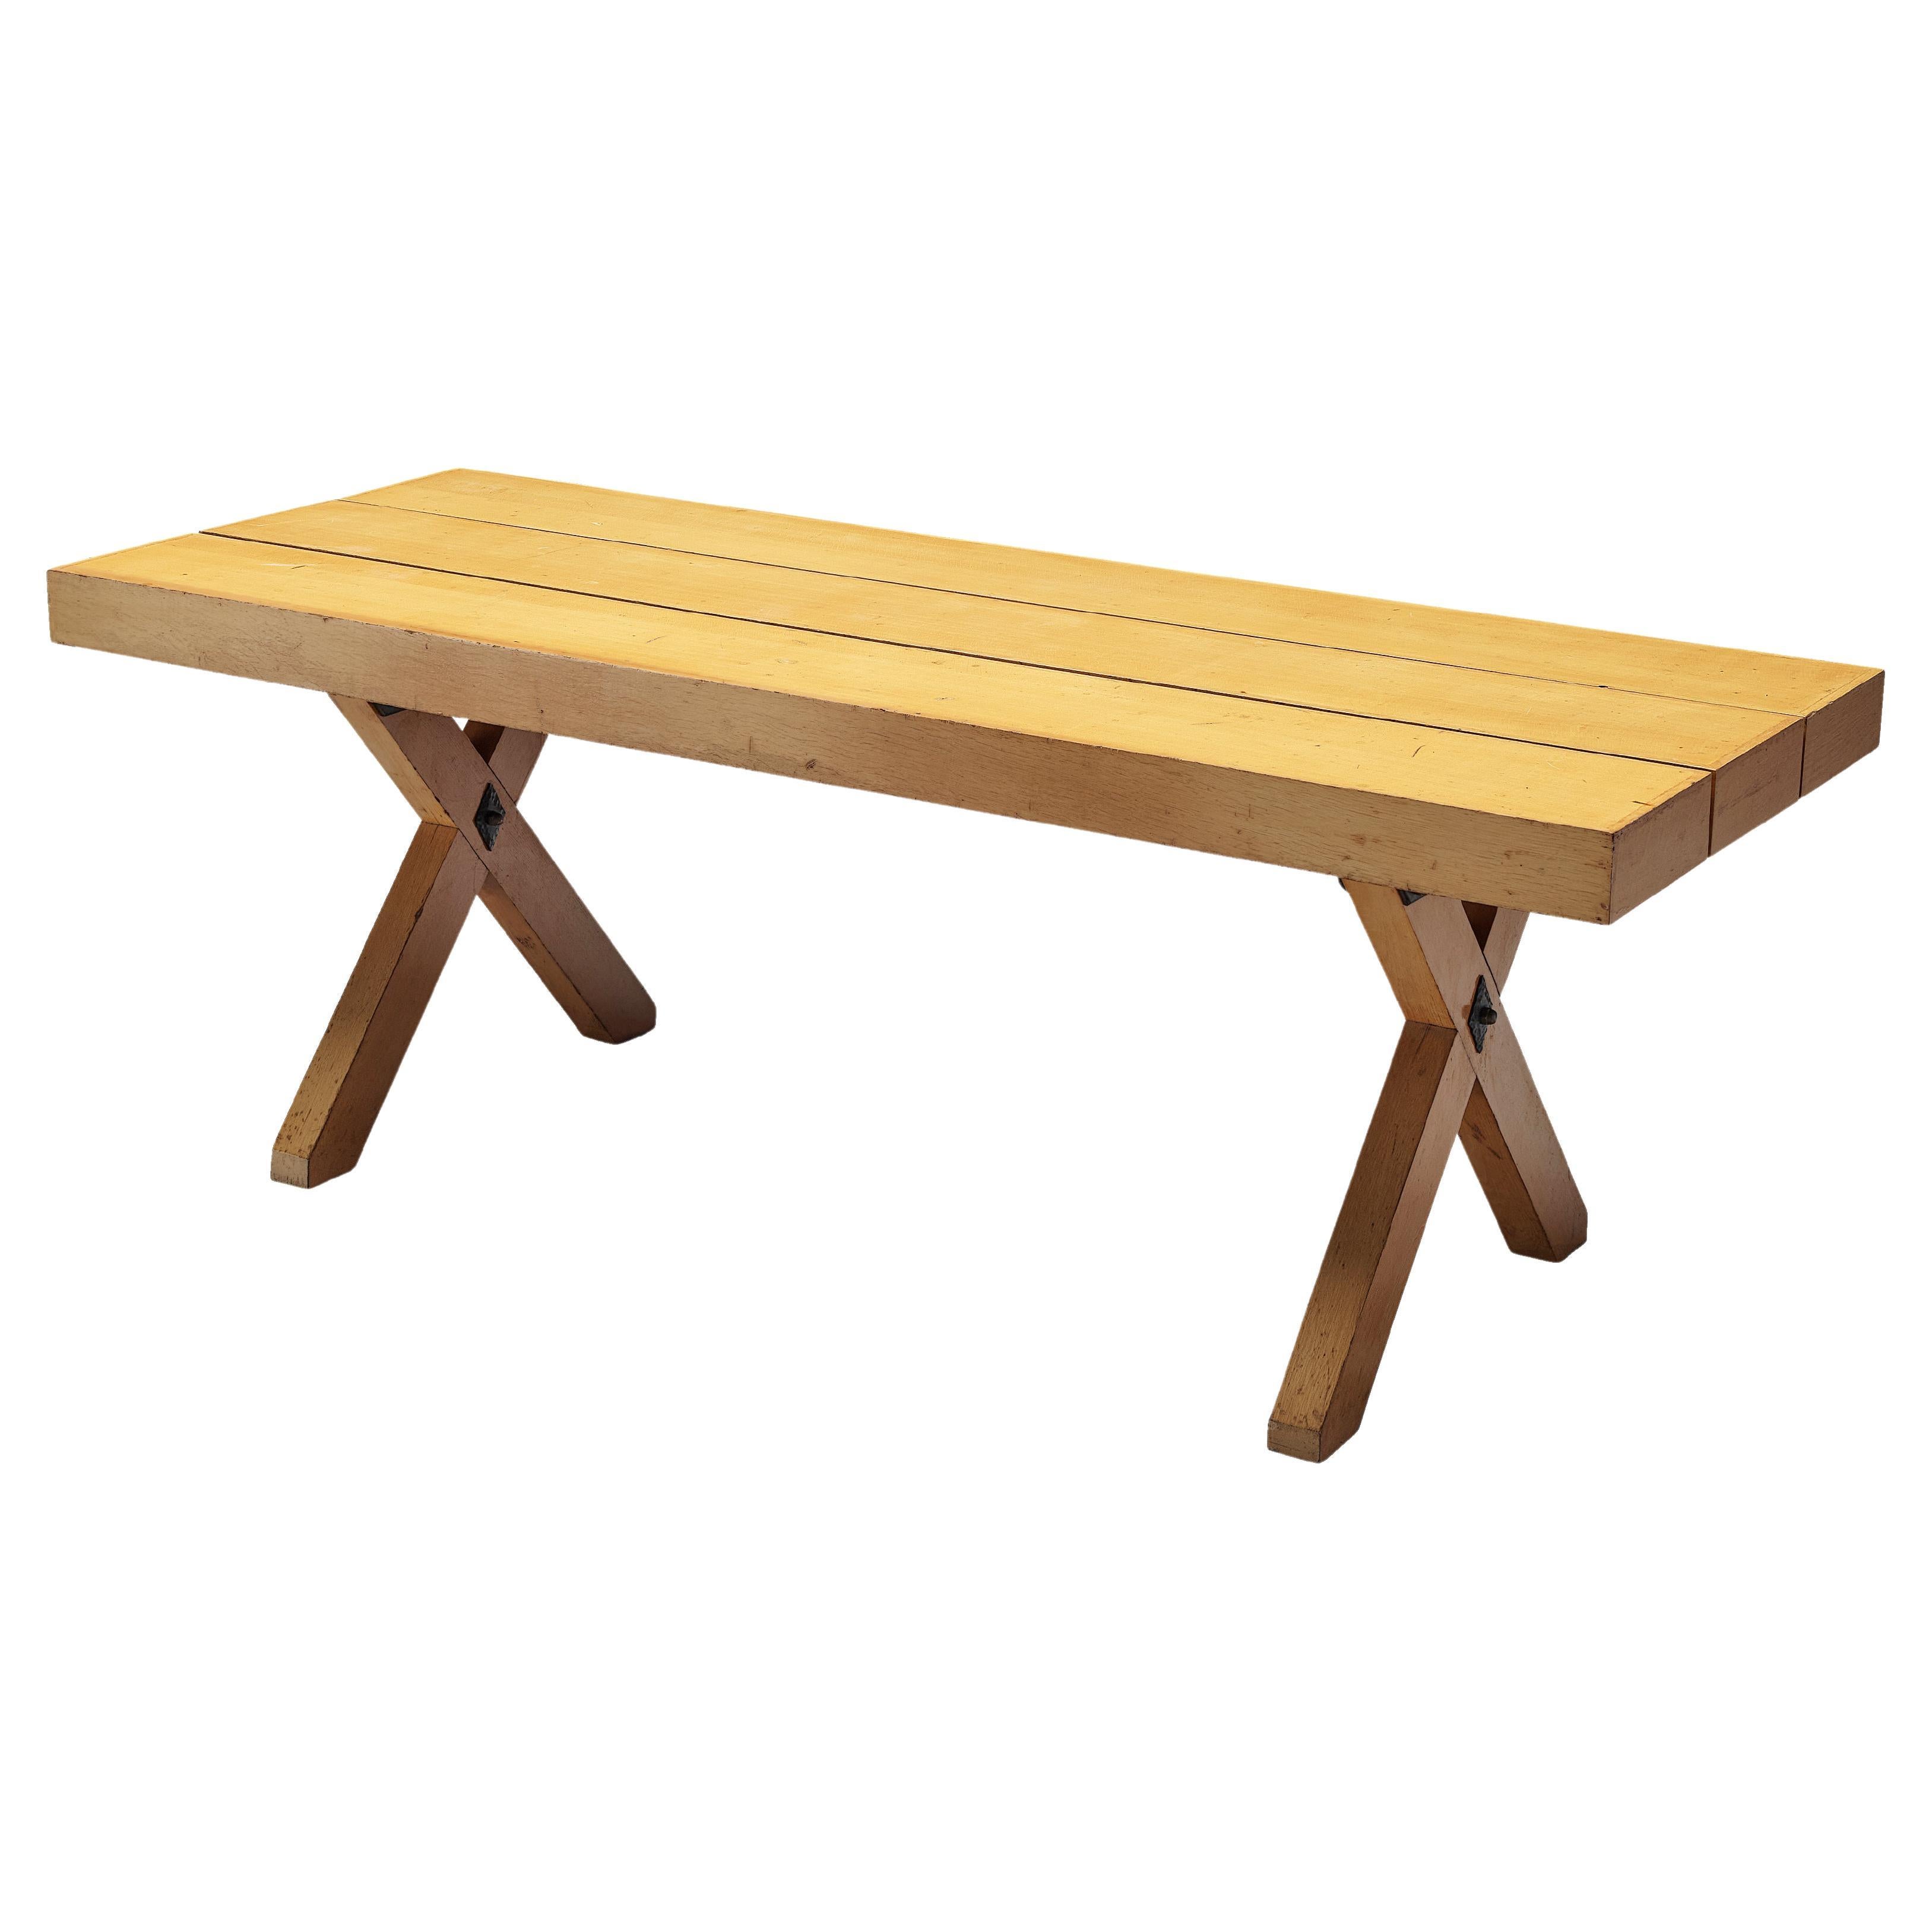 Rustic Italian Oak Cross-Legged Dining Table with Metal For Sale